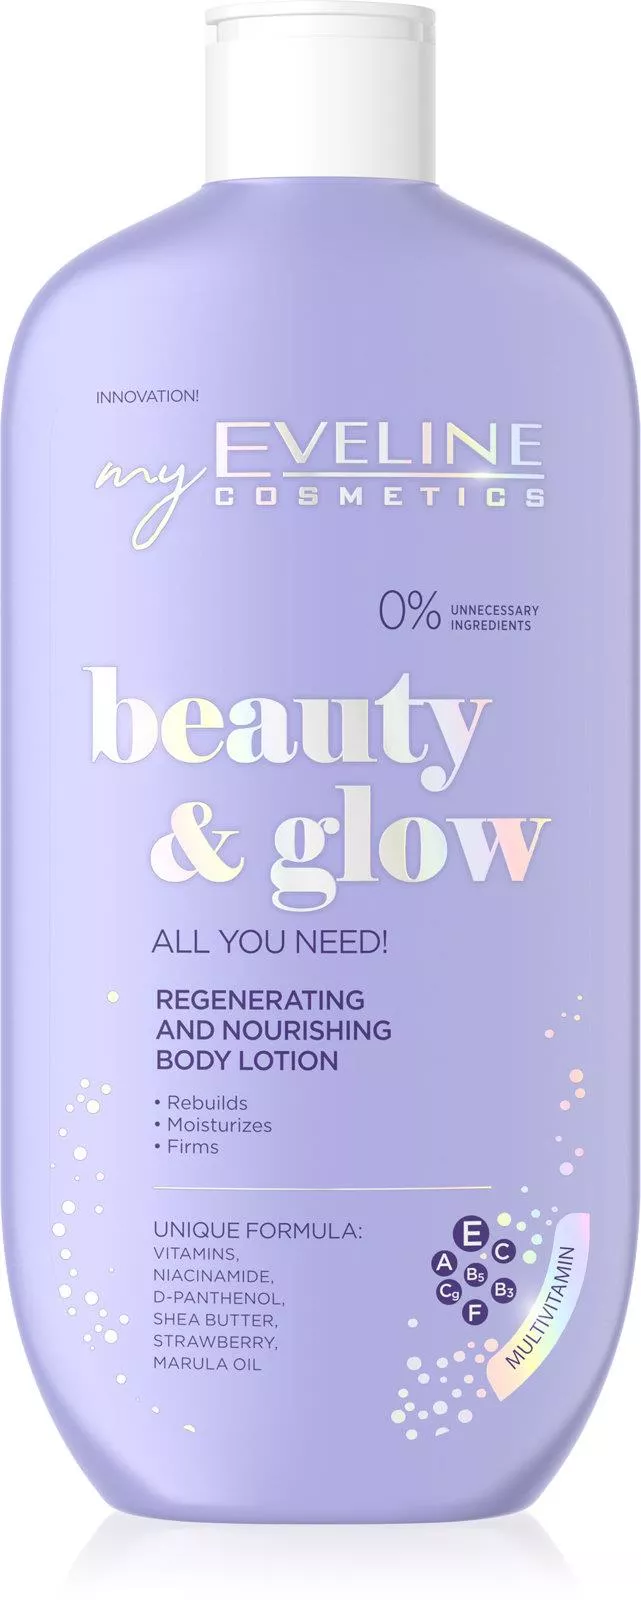 Lotiune de corp Beauty & Glow Regenerating and Nourishing Eveline Cosmetics, 350ml, [],drogheriemb.ro